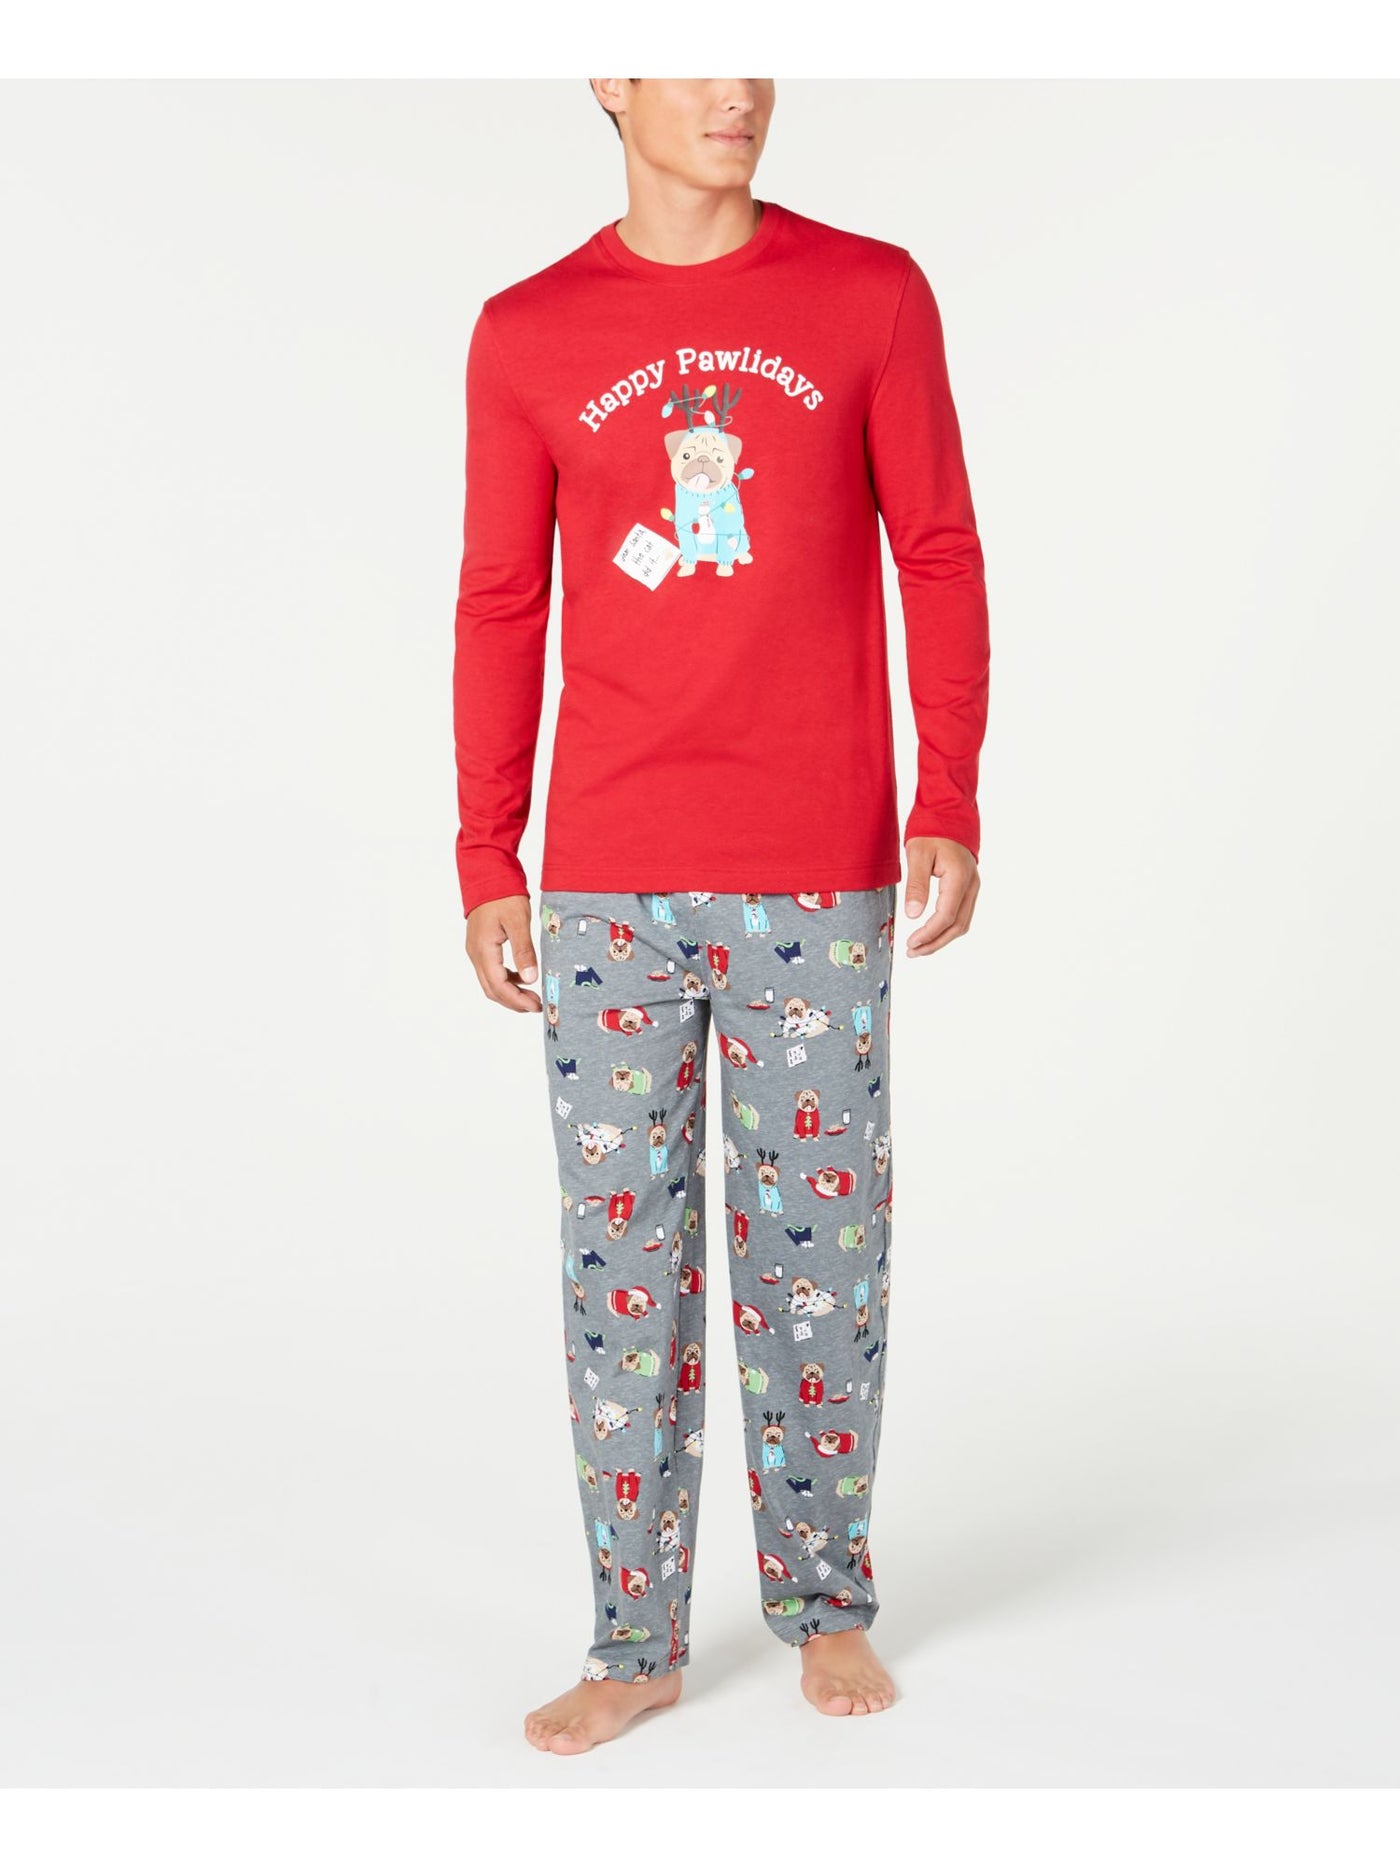 FAMILY PJs Mens Red Graphic T-Shirt Top Straight leg Pants Pajamas L